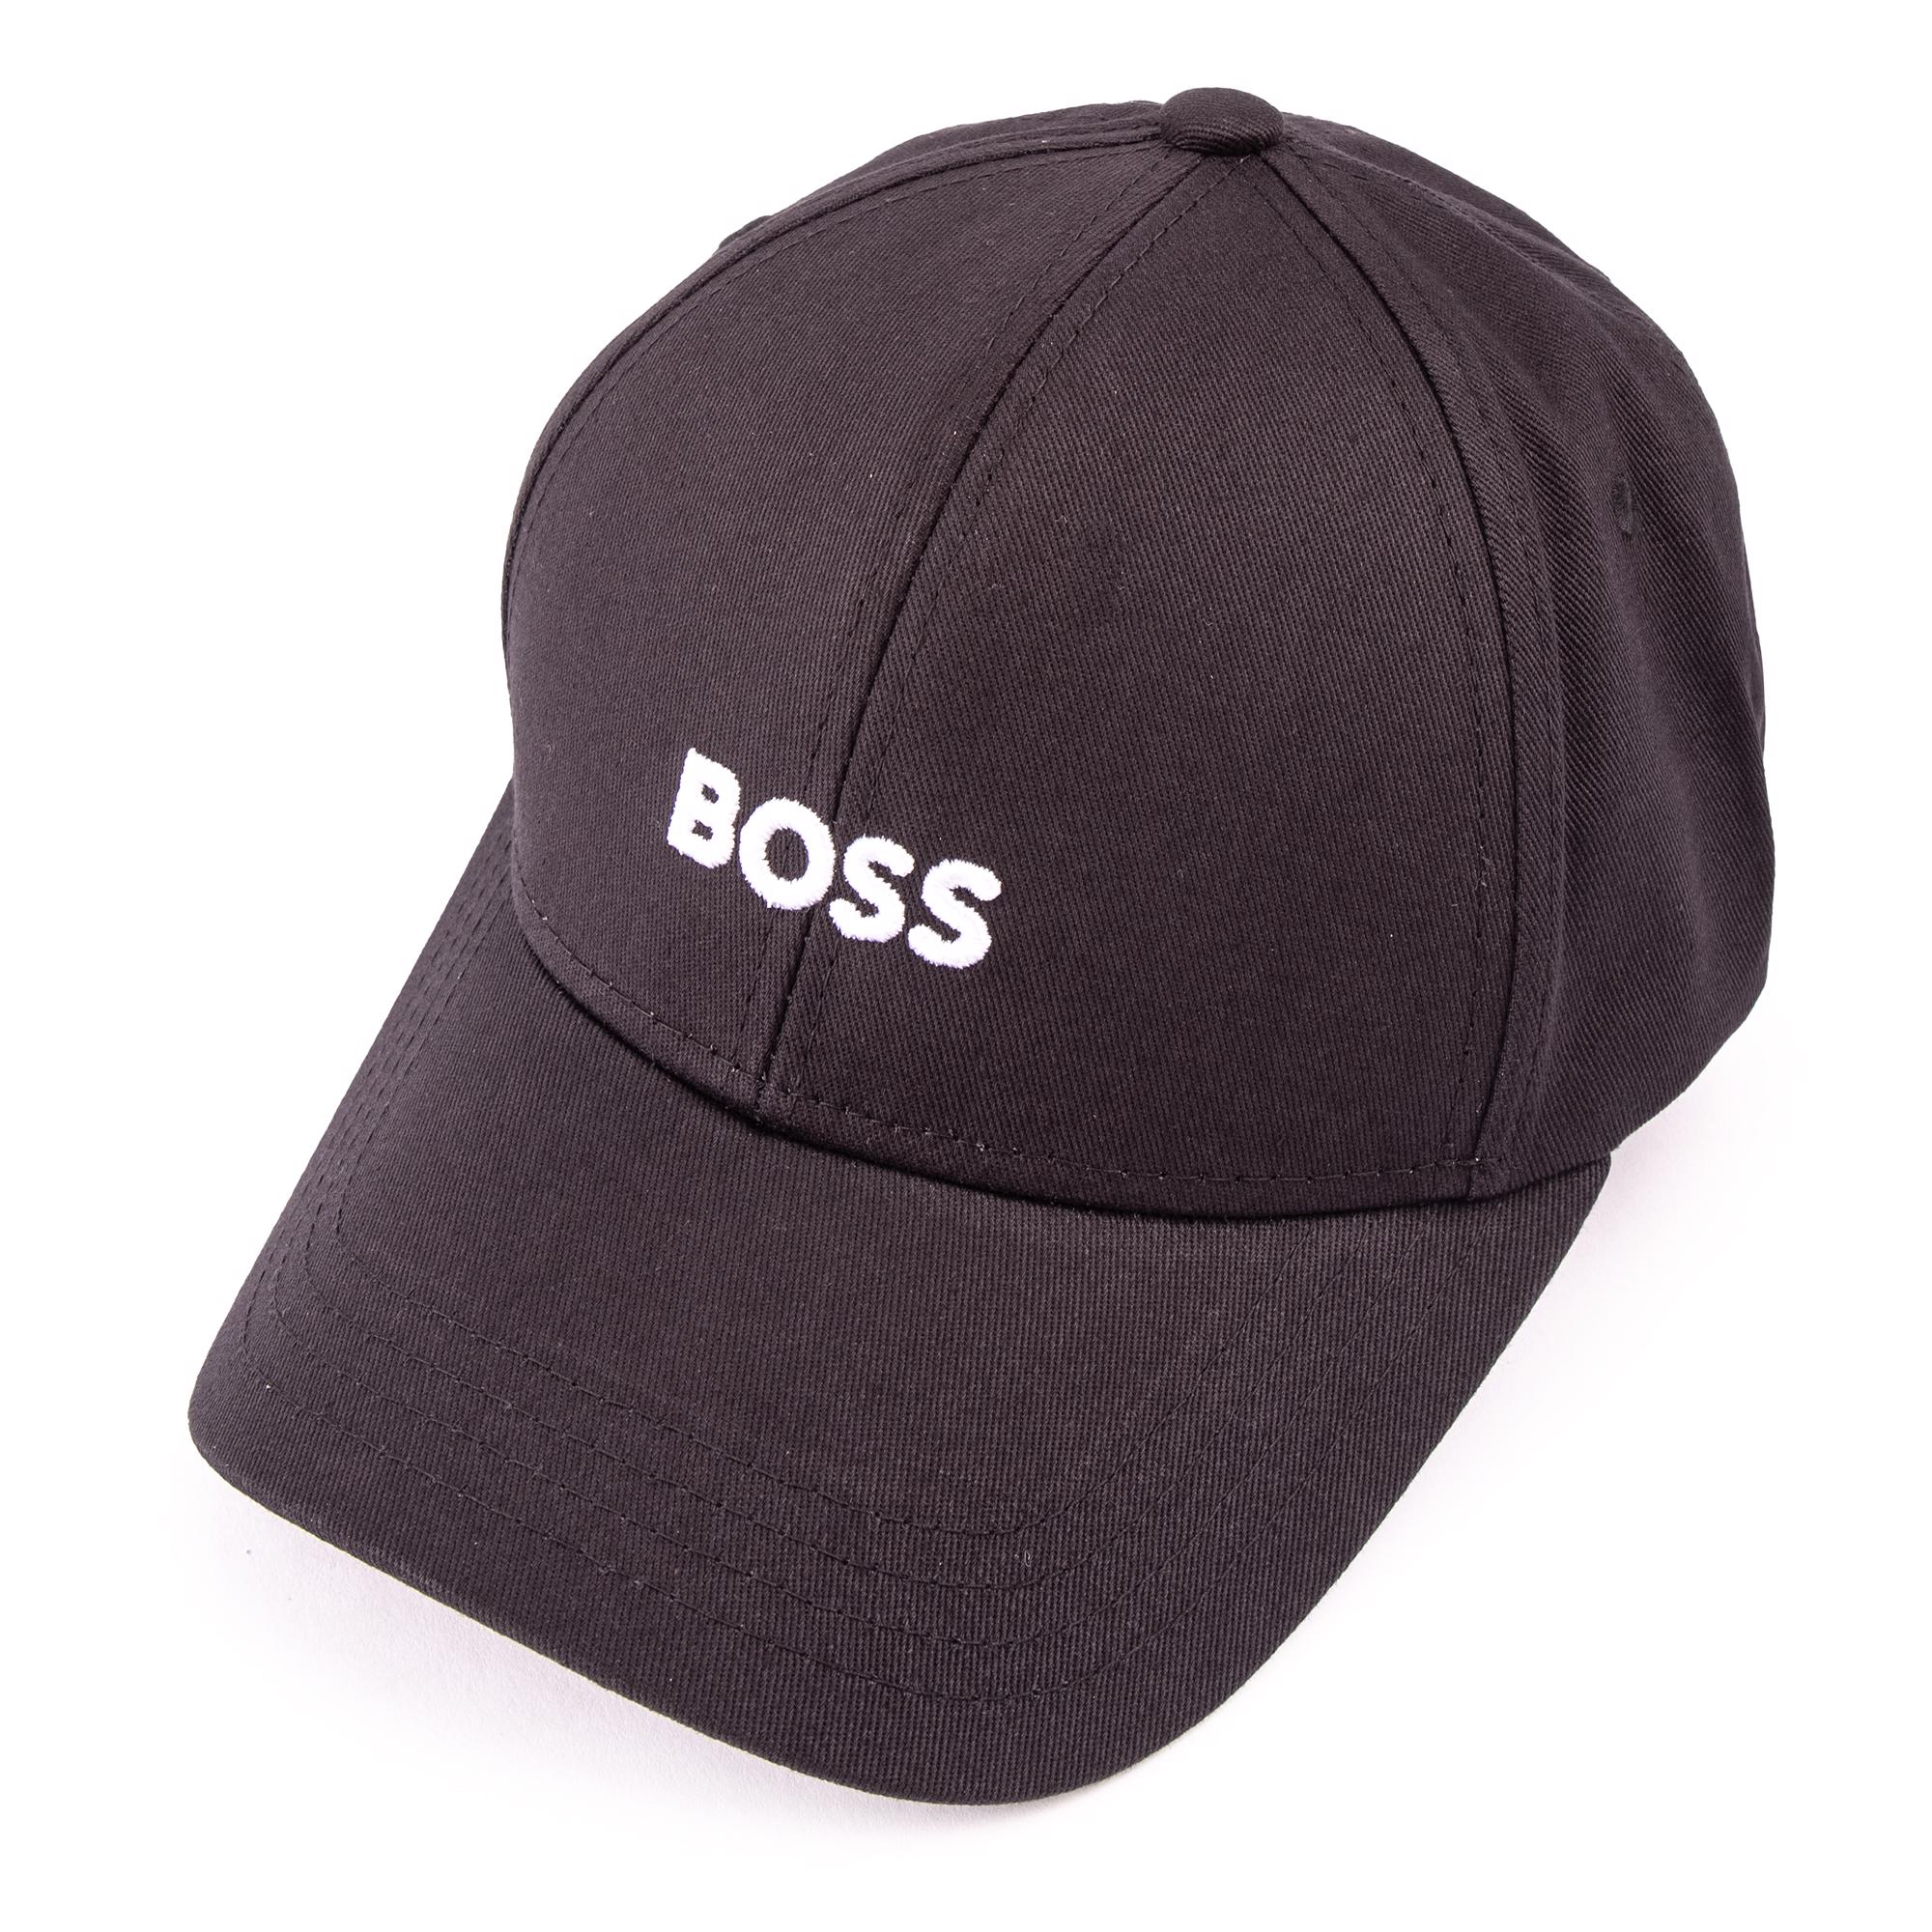 BOSS Mens Zed | Hats Cap Black eBay